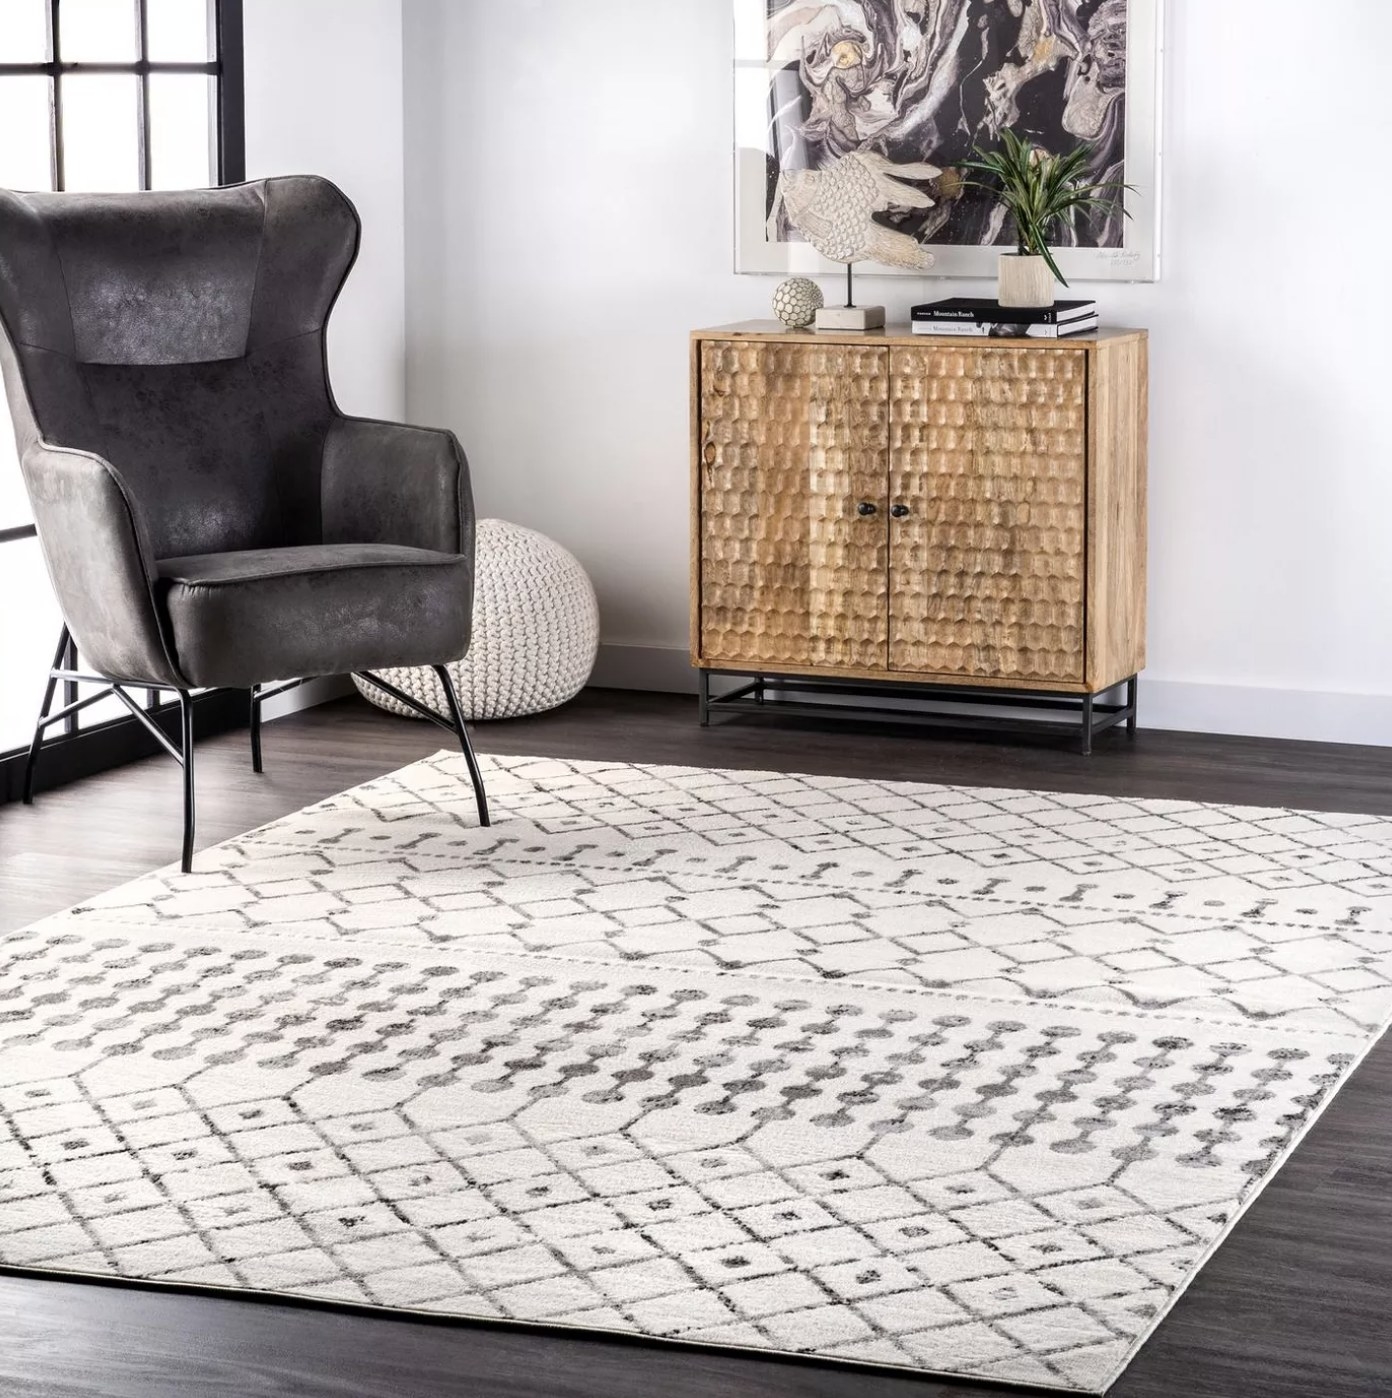 The white rug with dark grey designs